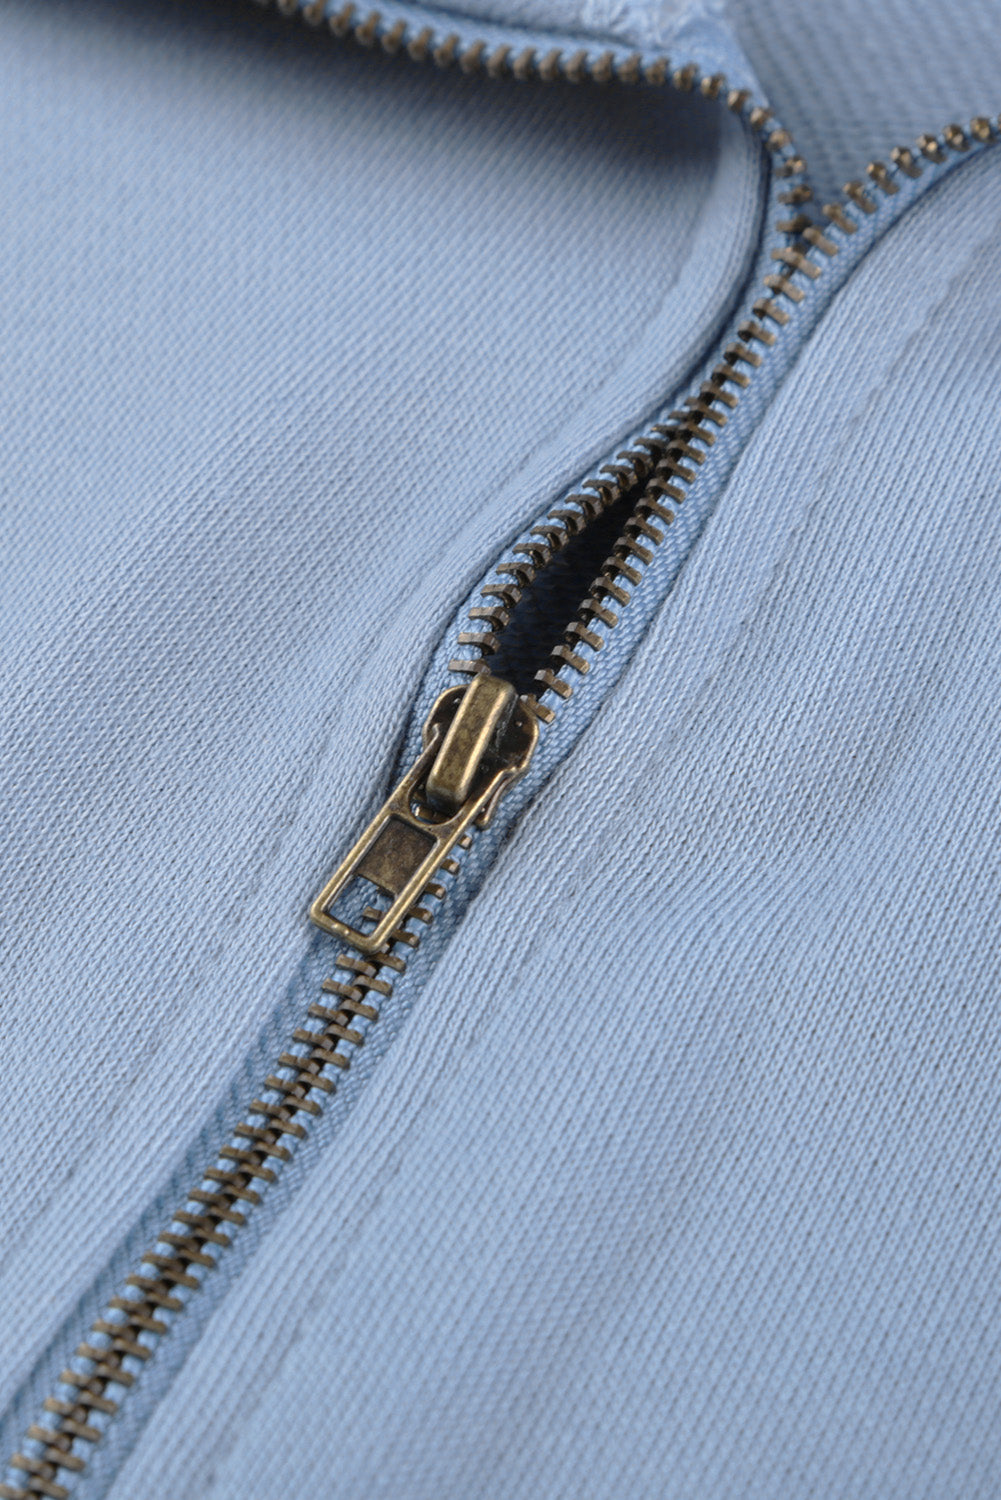 Cotton Pocketed Half Zip Pullover Sky Blue Sweatshirt